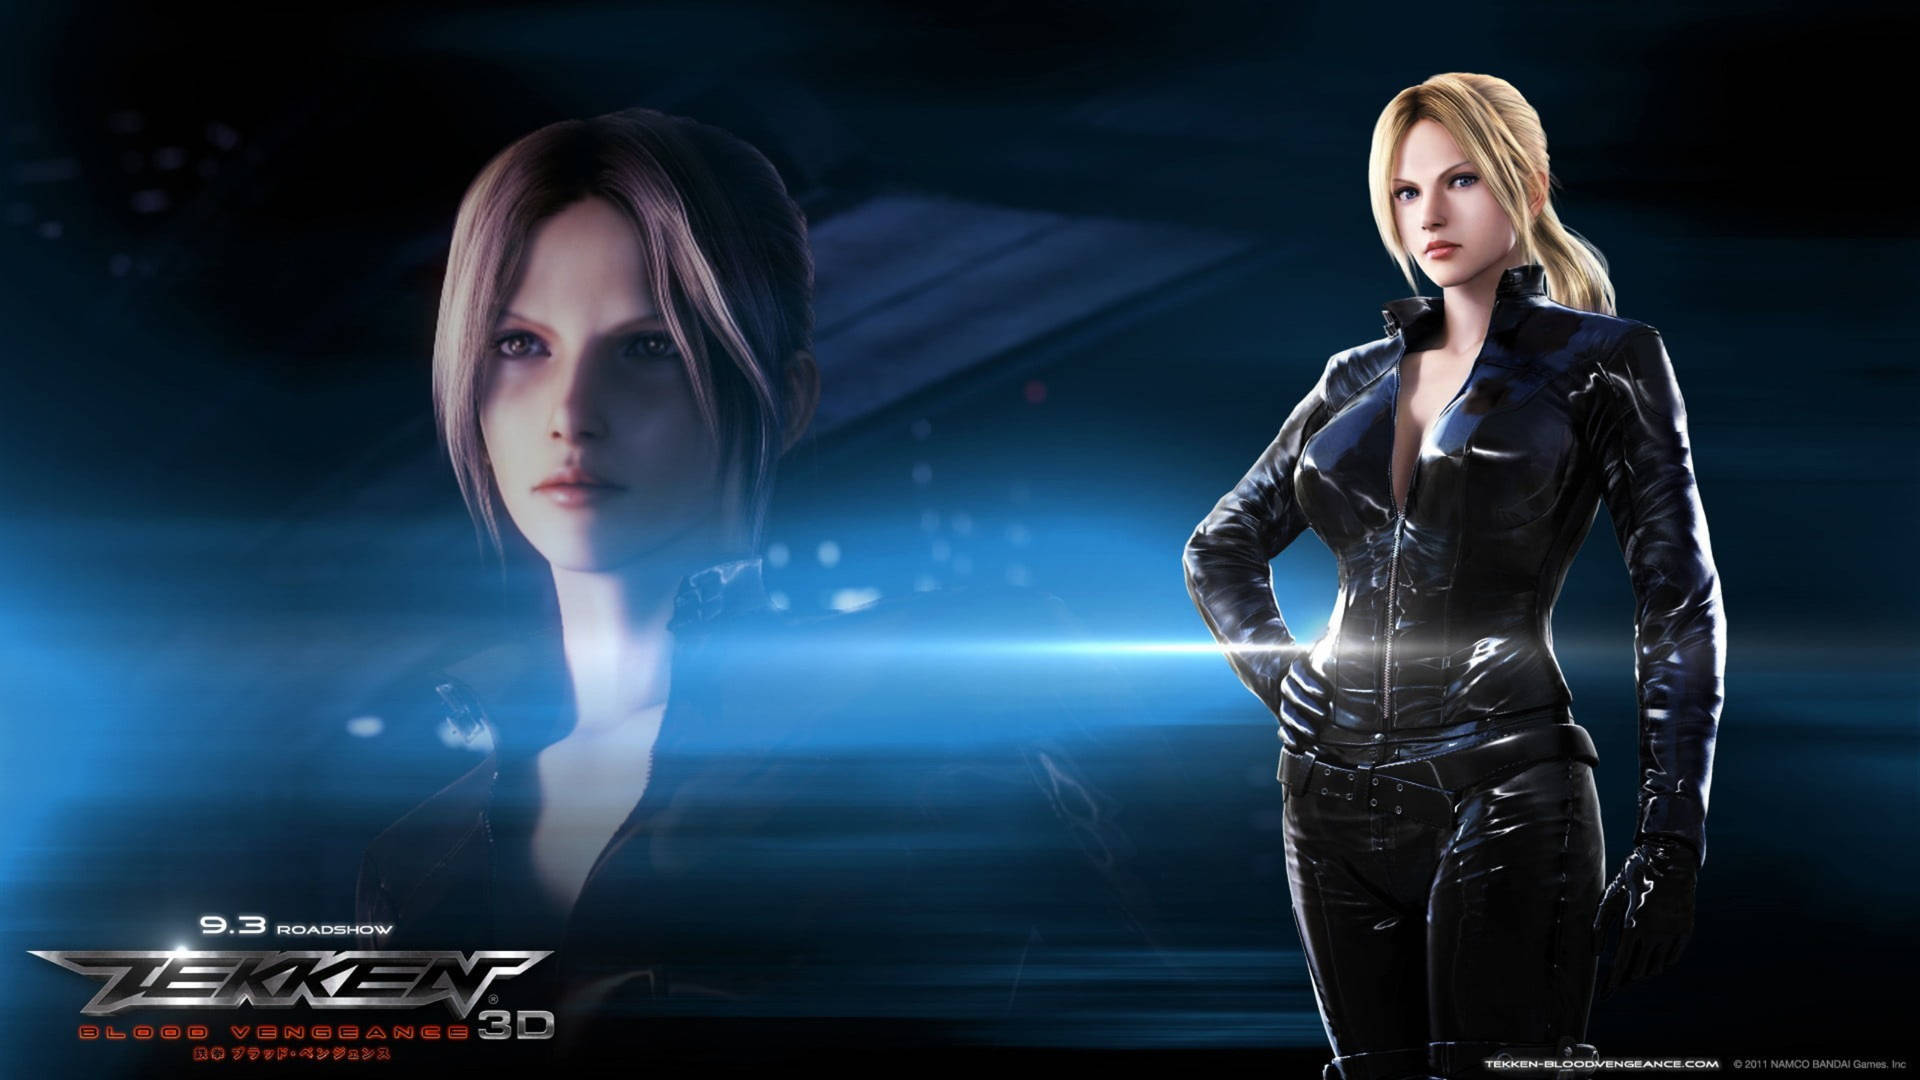 Tekken Nina Williams Digital Cover Background